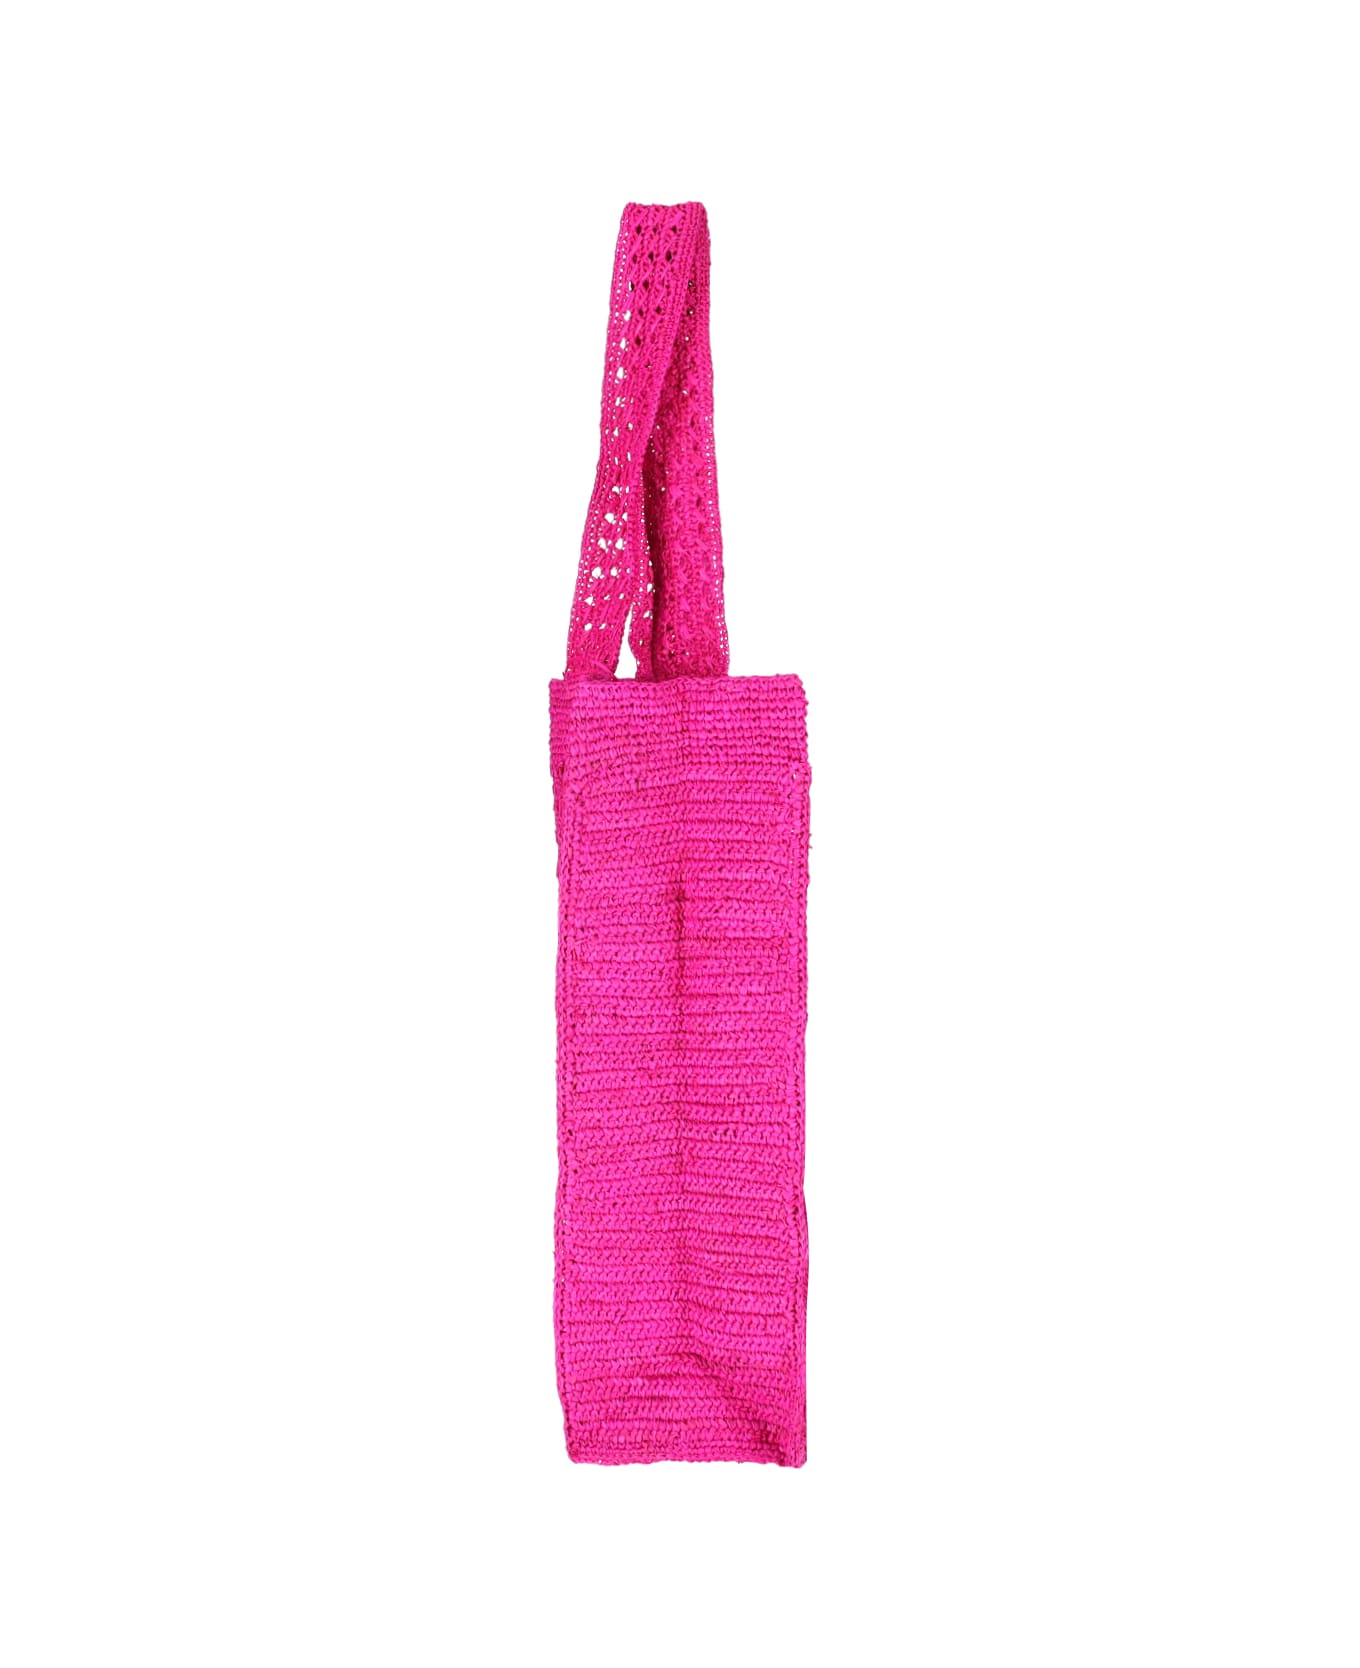 Ibeliv 'bevata' Tote Bag - Pink トートバッグ